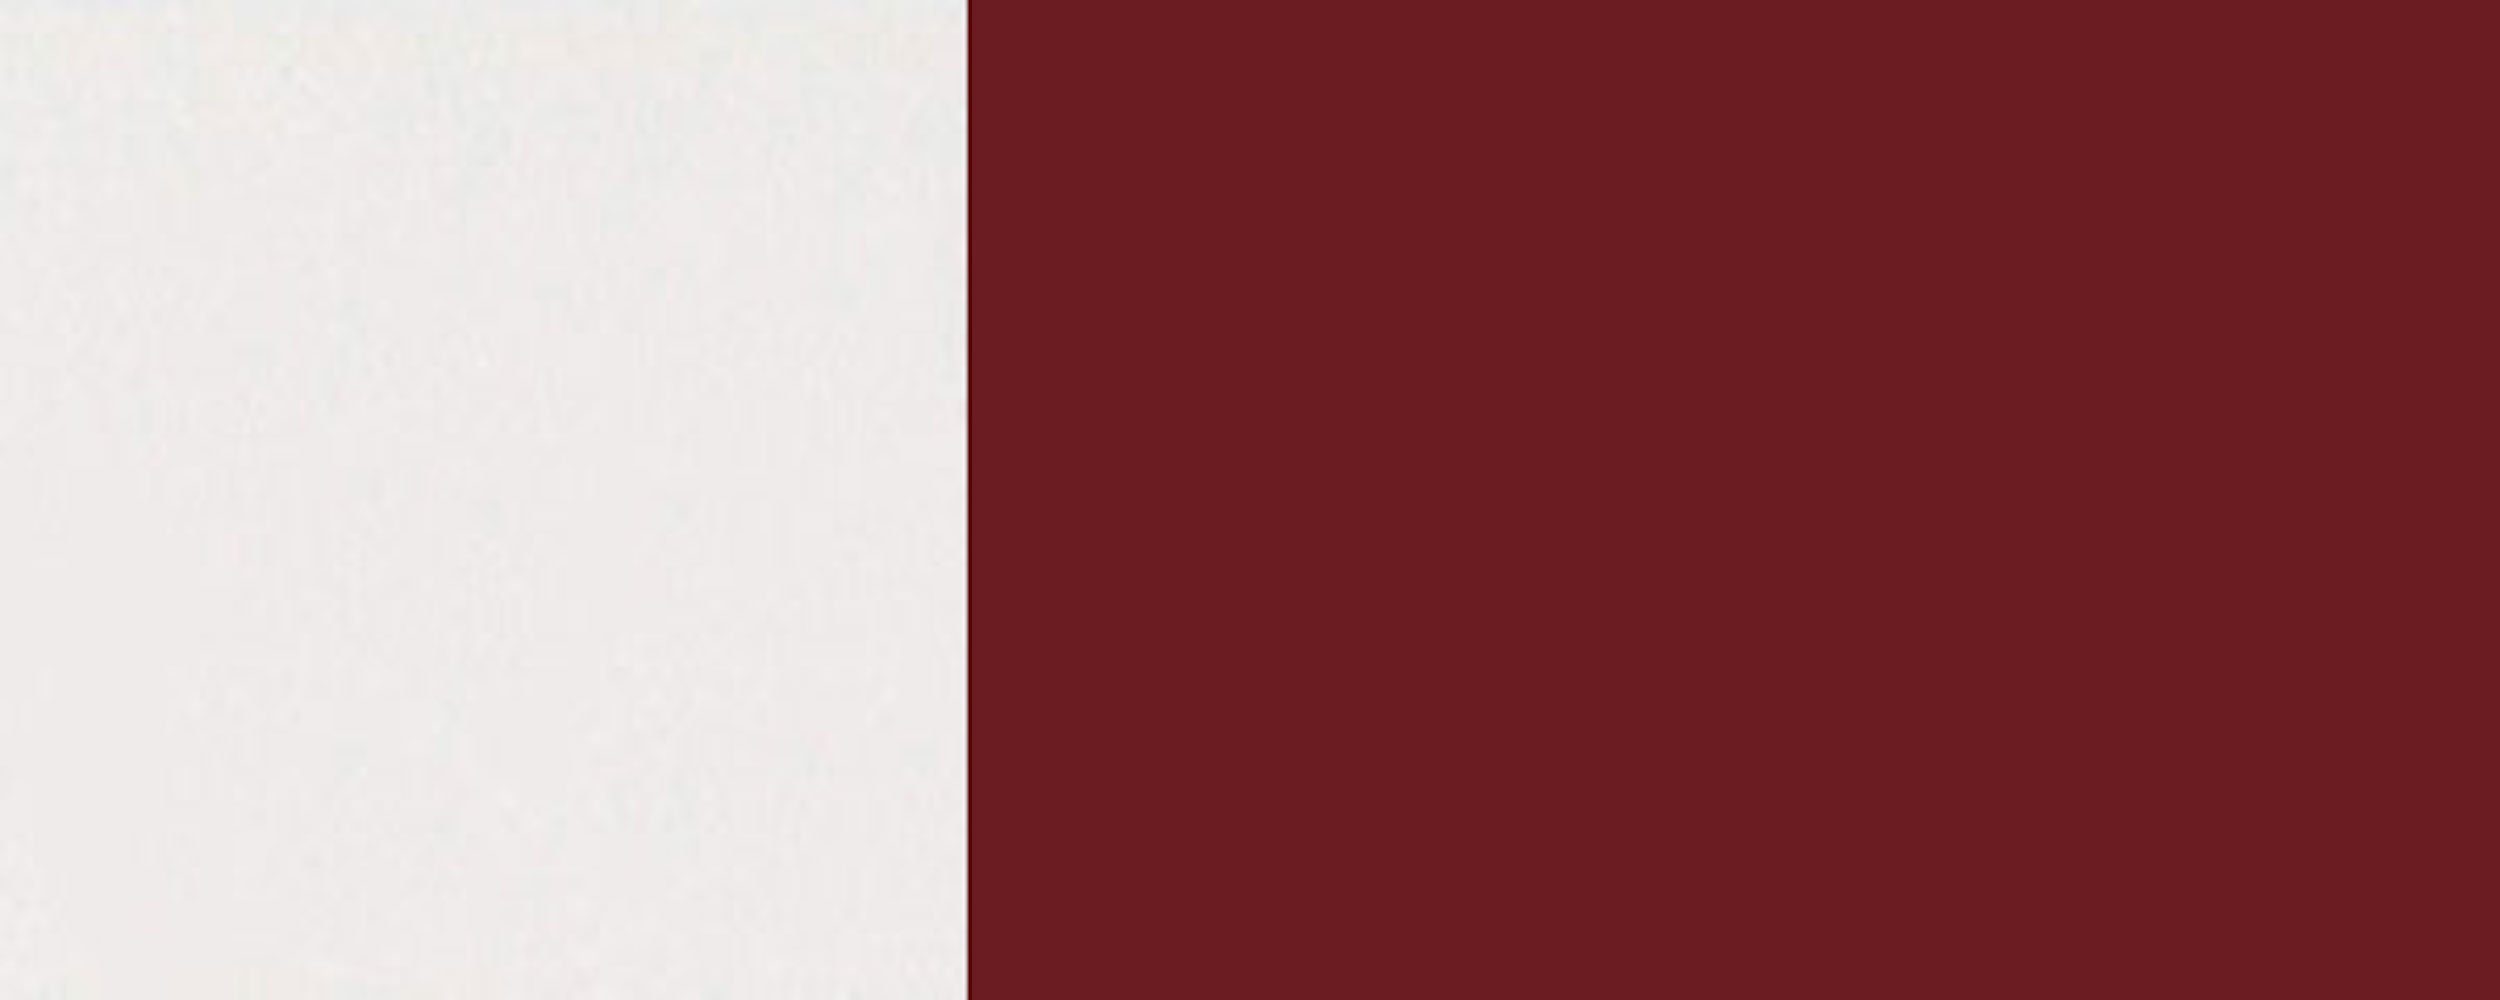 Rimini 3004 2-türig RAL matt Feldmann-Wohnen Front- Klapphängeschrank purpurrot 90cm (Rimini) wählbar und Korpusfarbe